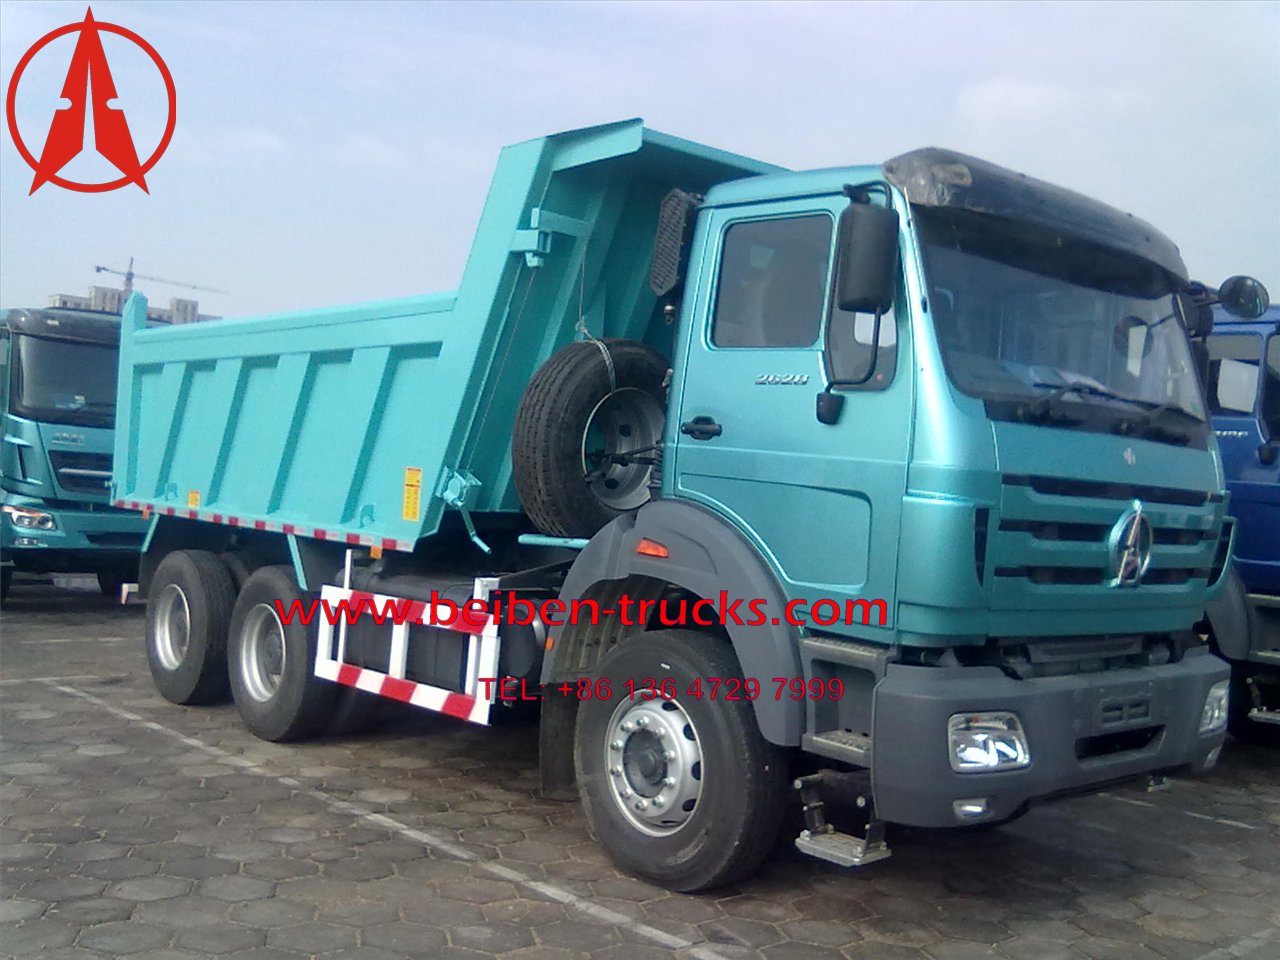 baotou Beiben 50 T dump trucks supplier